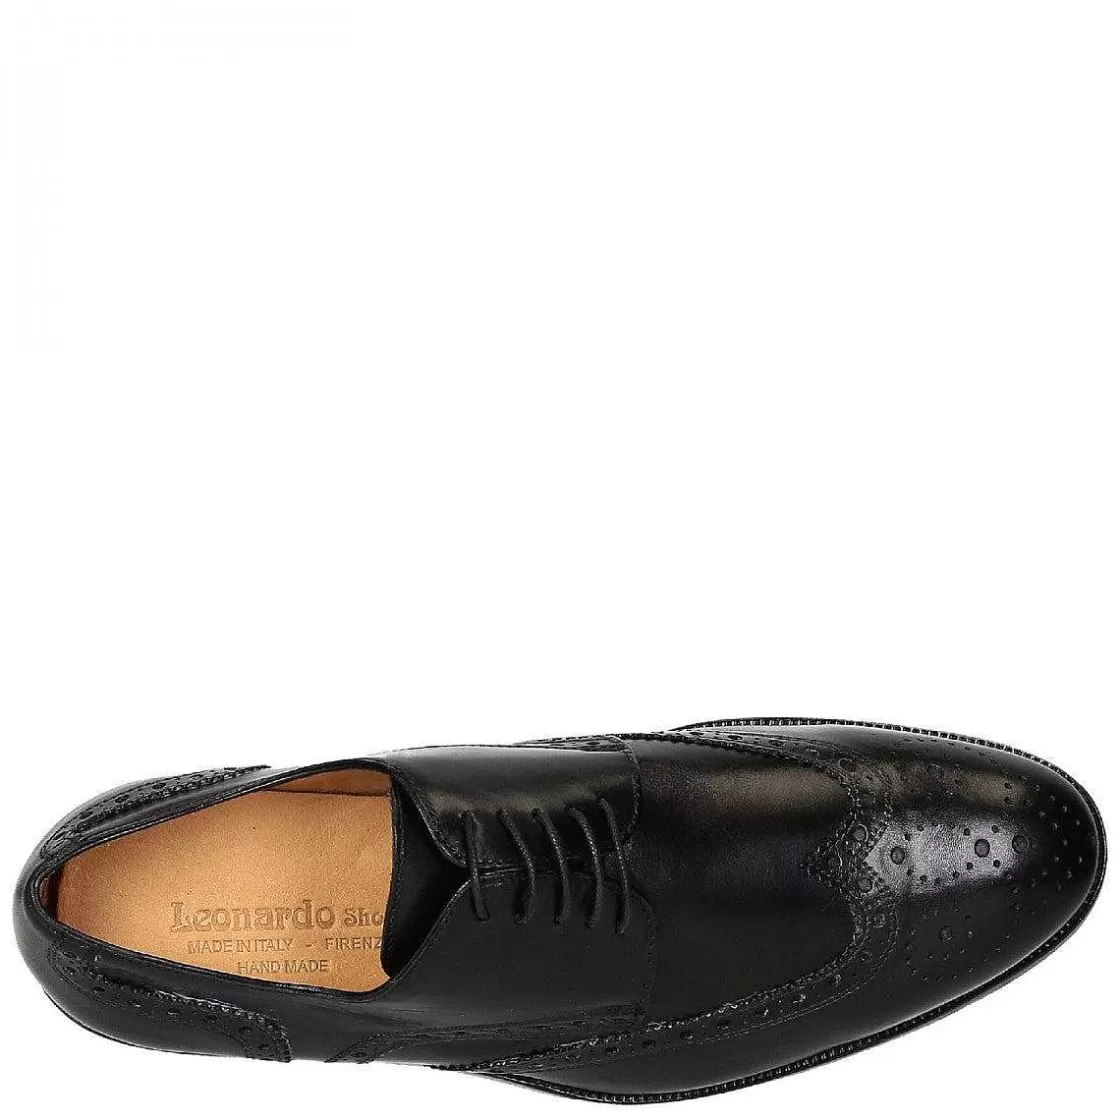 Leonardo Handmade Wingtip Brogues Derby Shoes In Black Leather Best Sale